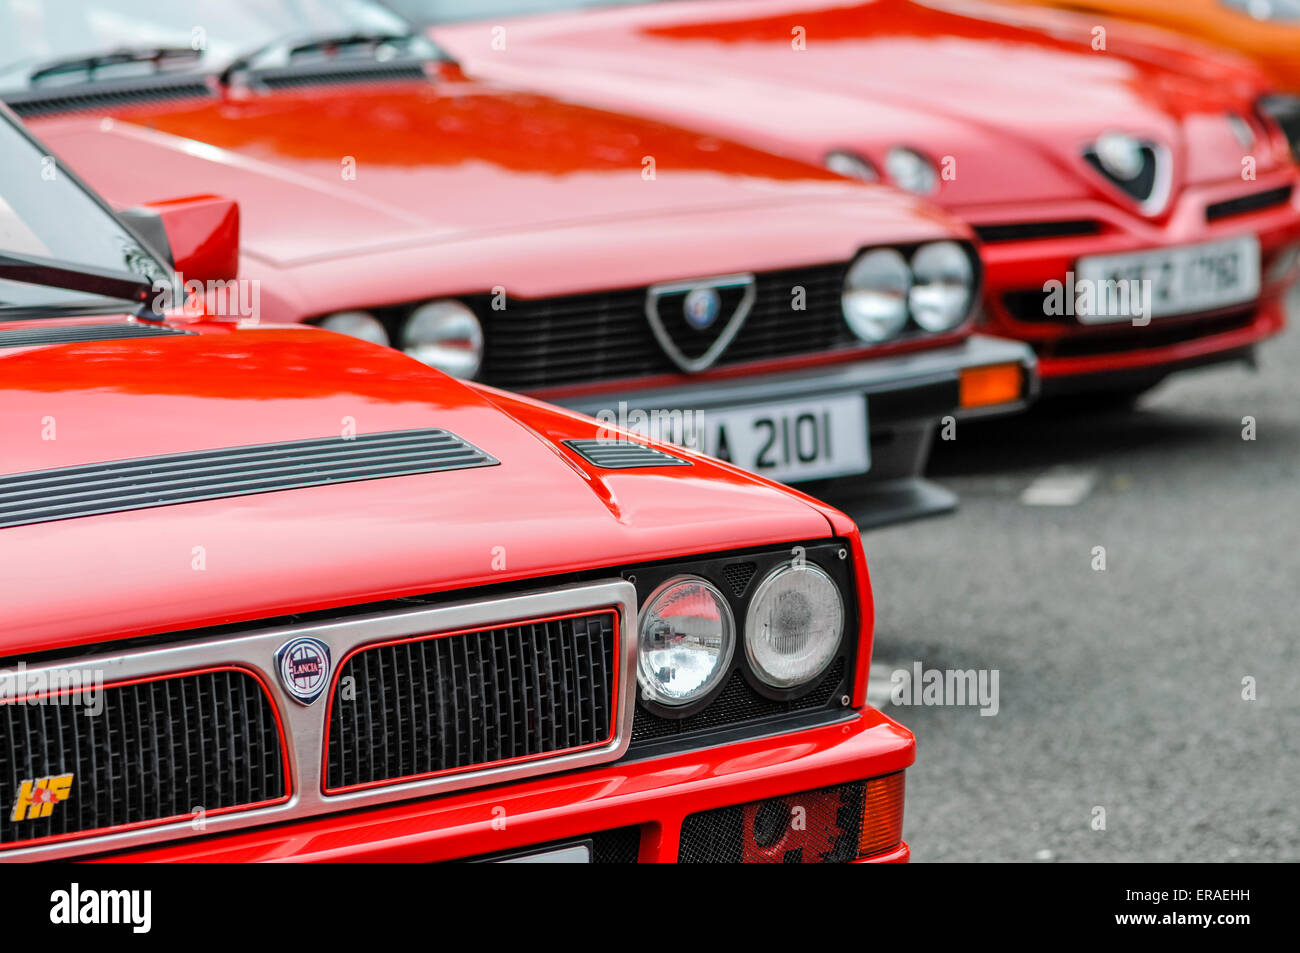 A row of Lancia and Alfa Romeo cars. Stock Photo